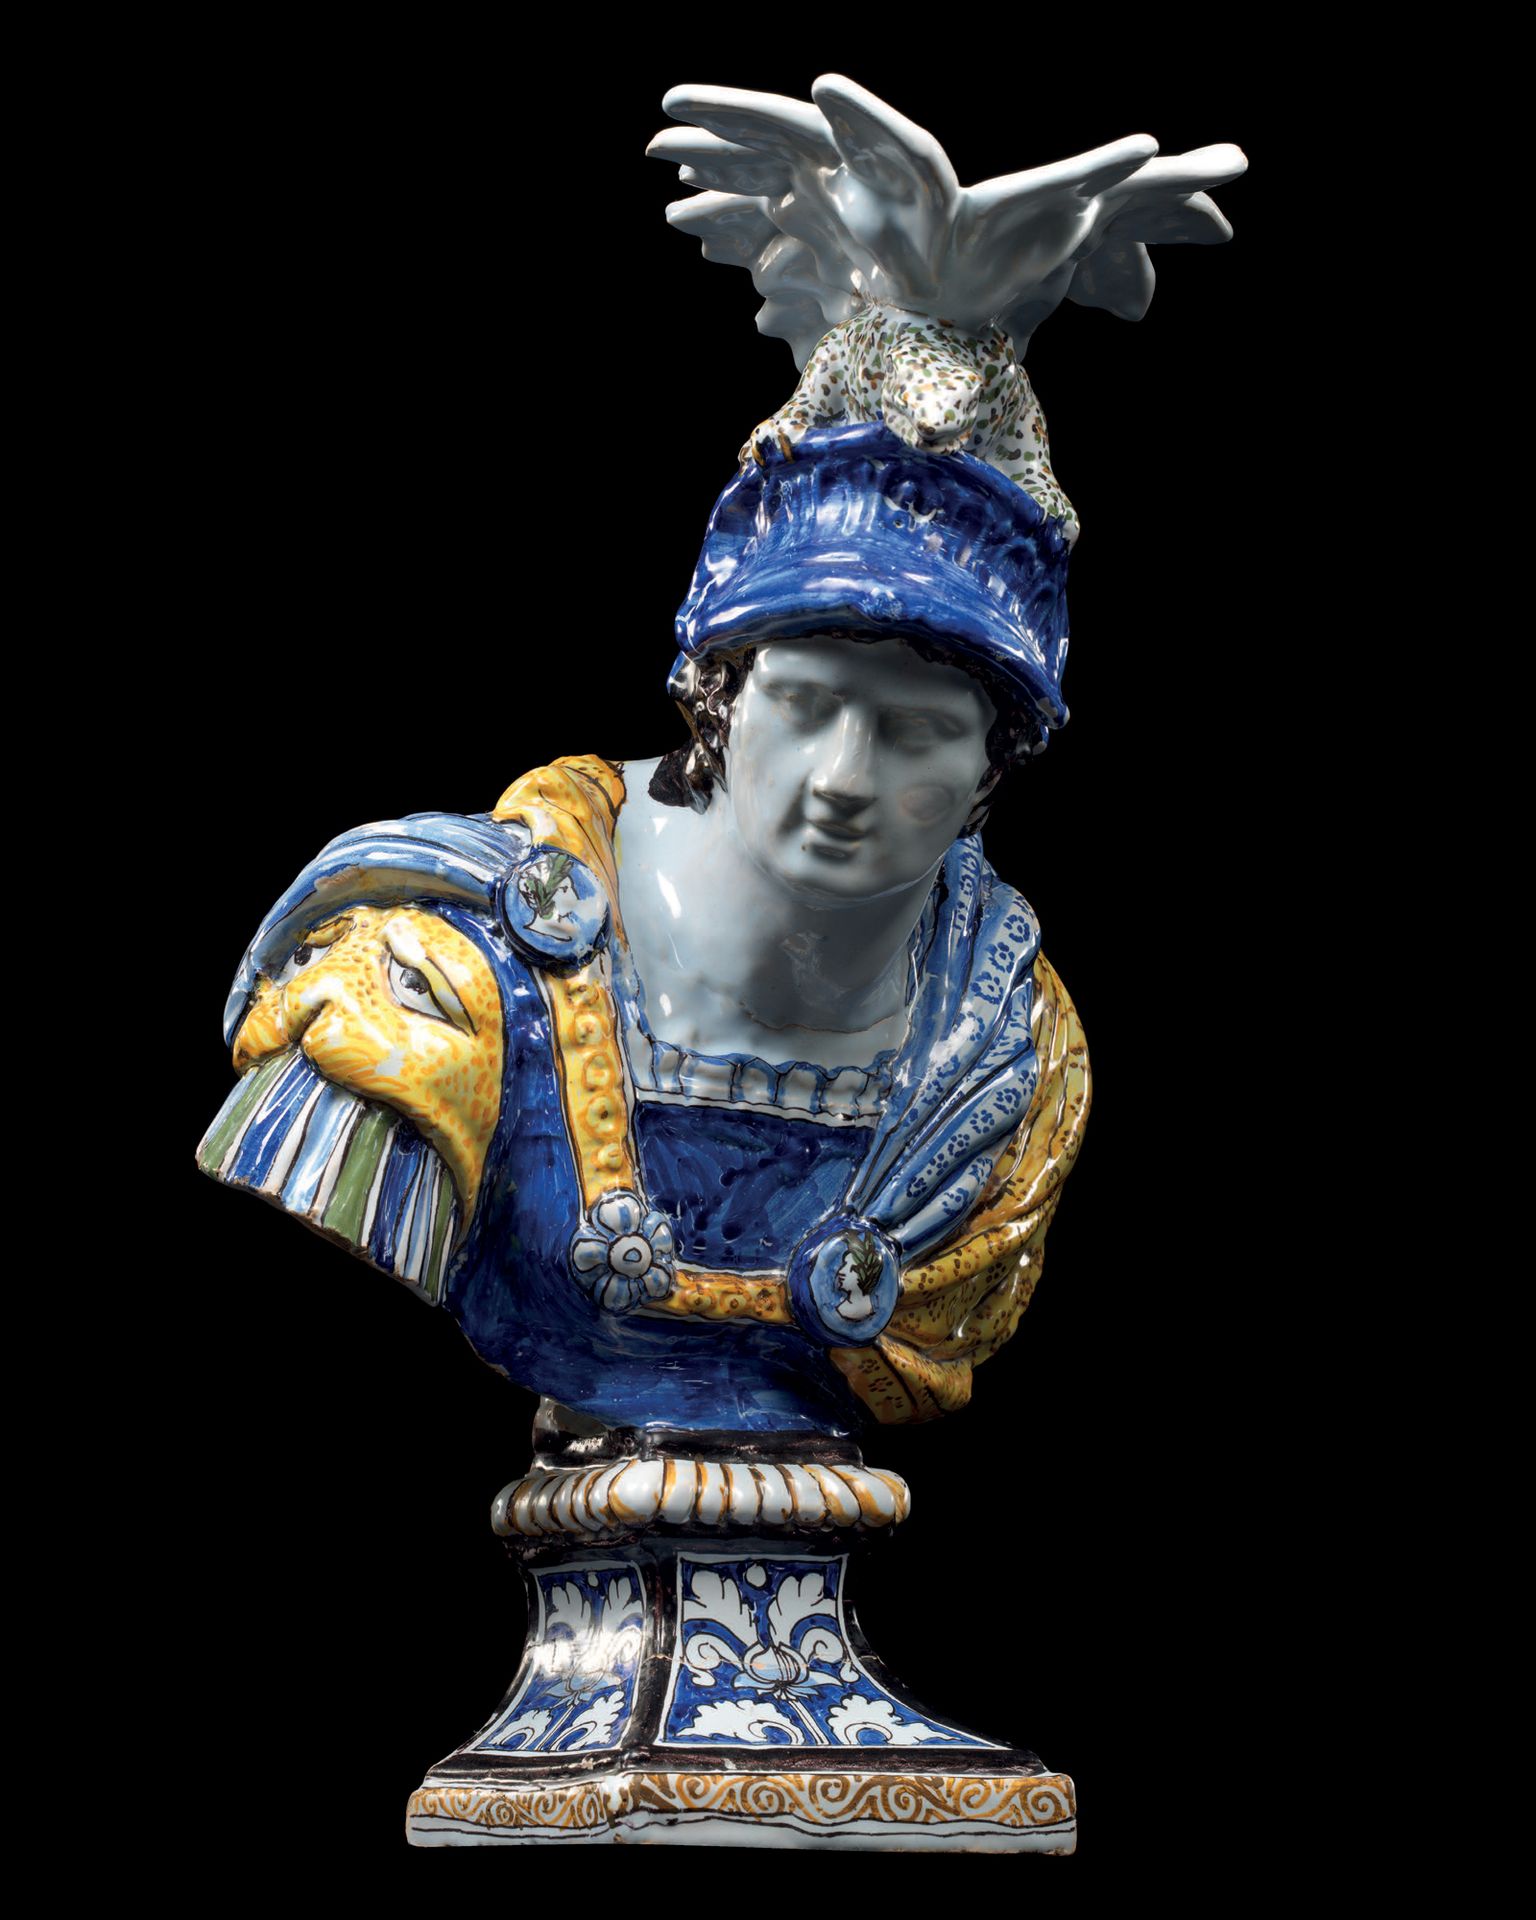 Null 带有 "ÀLA PALETTE "装饰的战士半身像
内韦尔，17世纪末 釉陶
轻微修复
高40厘米，宽24.5厘米，长28.5厘米
出处
Nicoli&hellip;